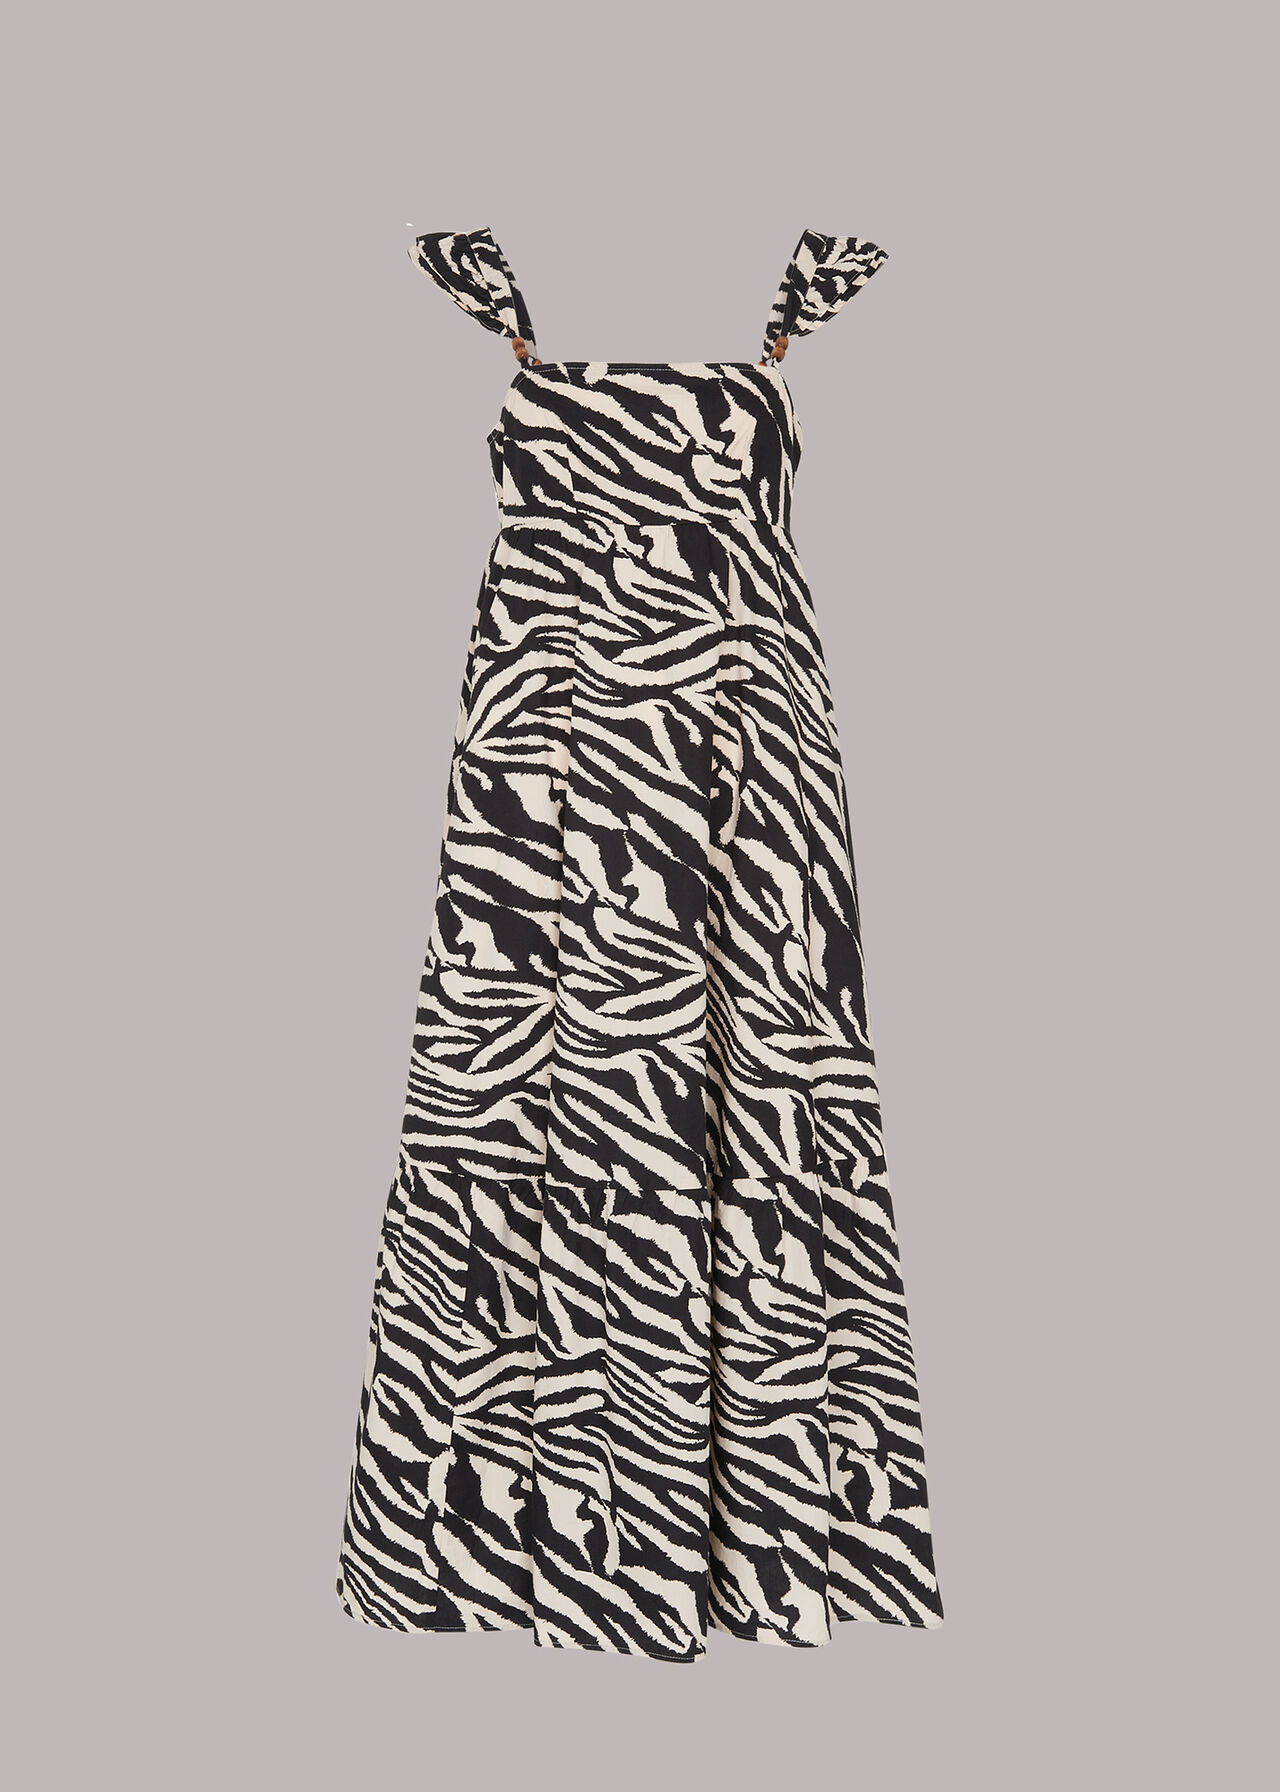 Mountain Zebra Print Dress